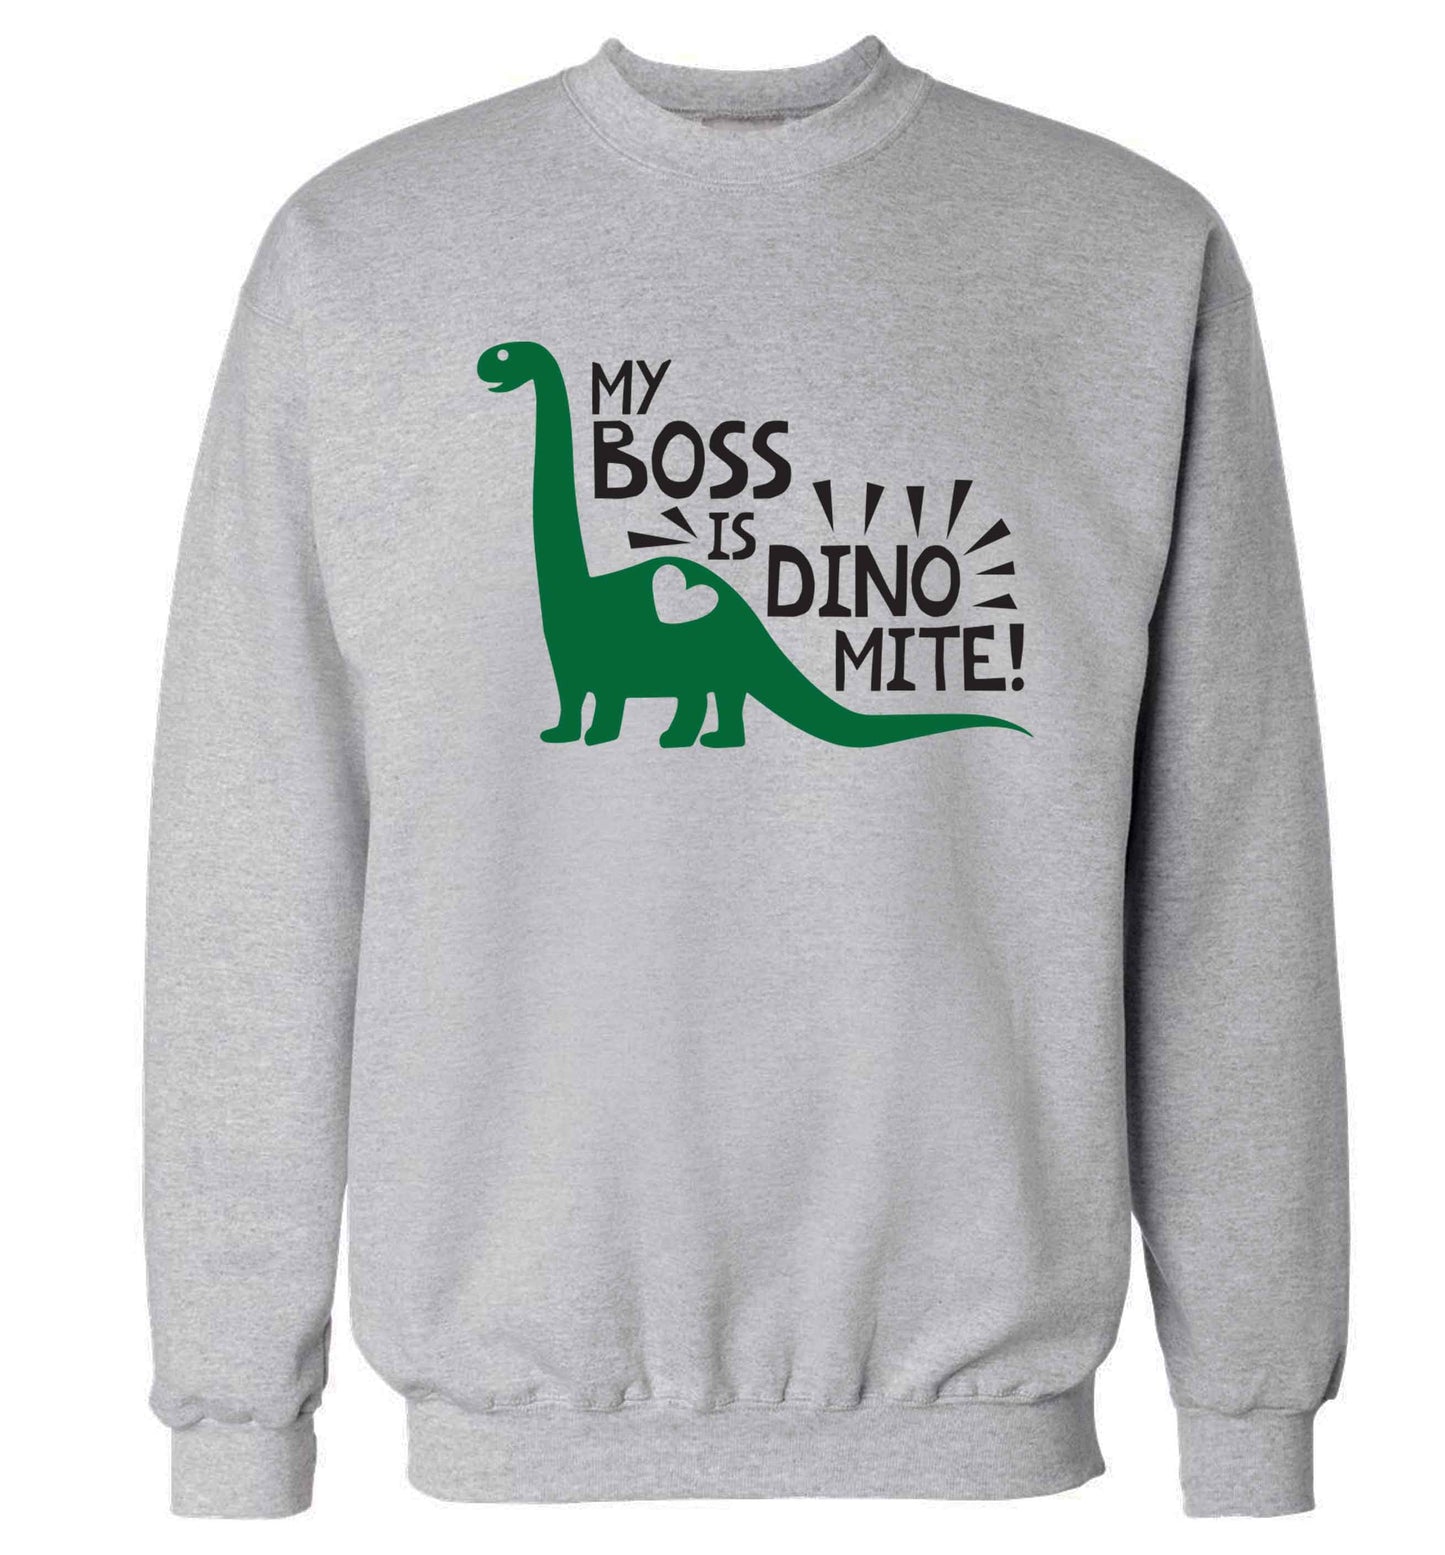 My boss is dinomite! Adult's unisex grey Sweater 2XL